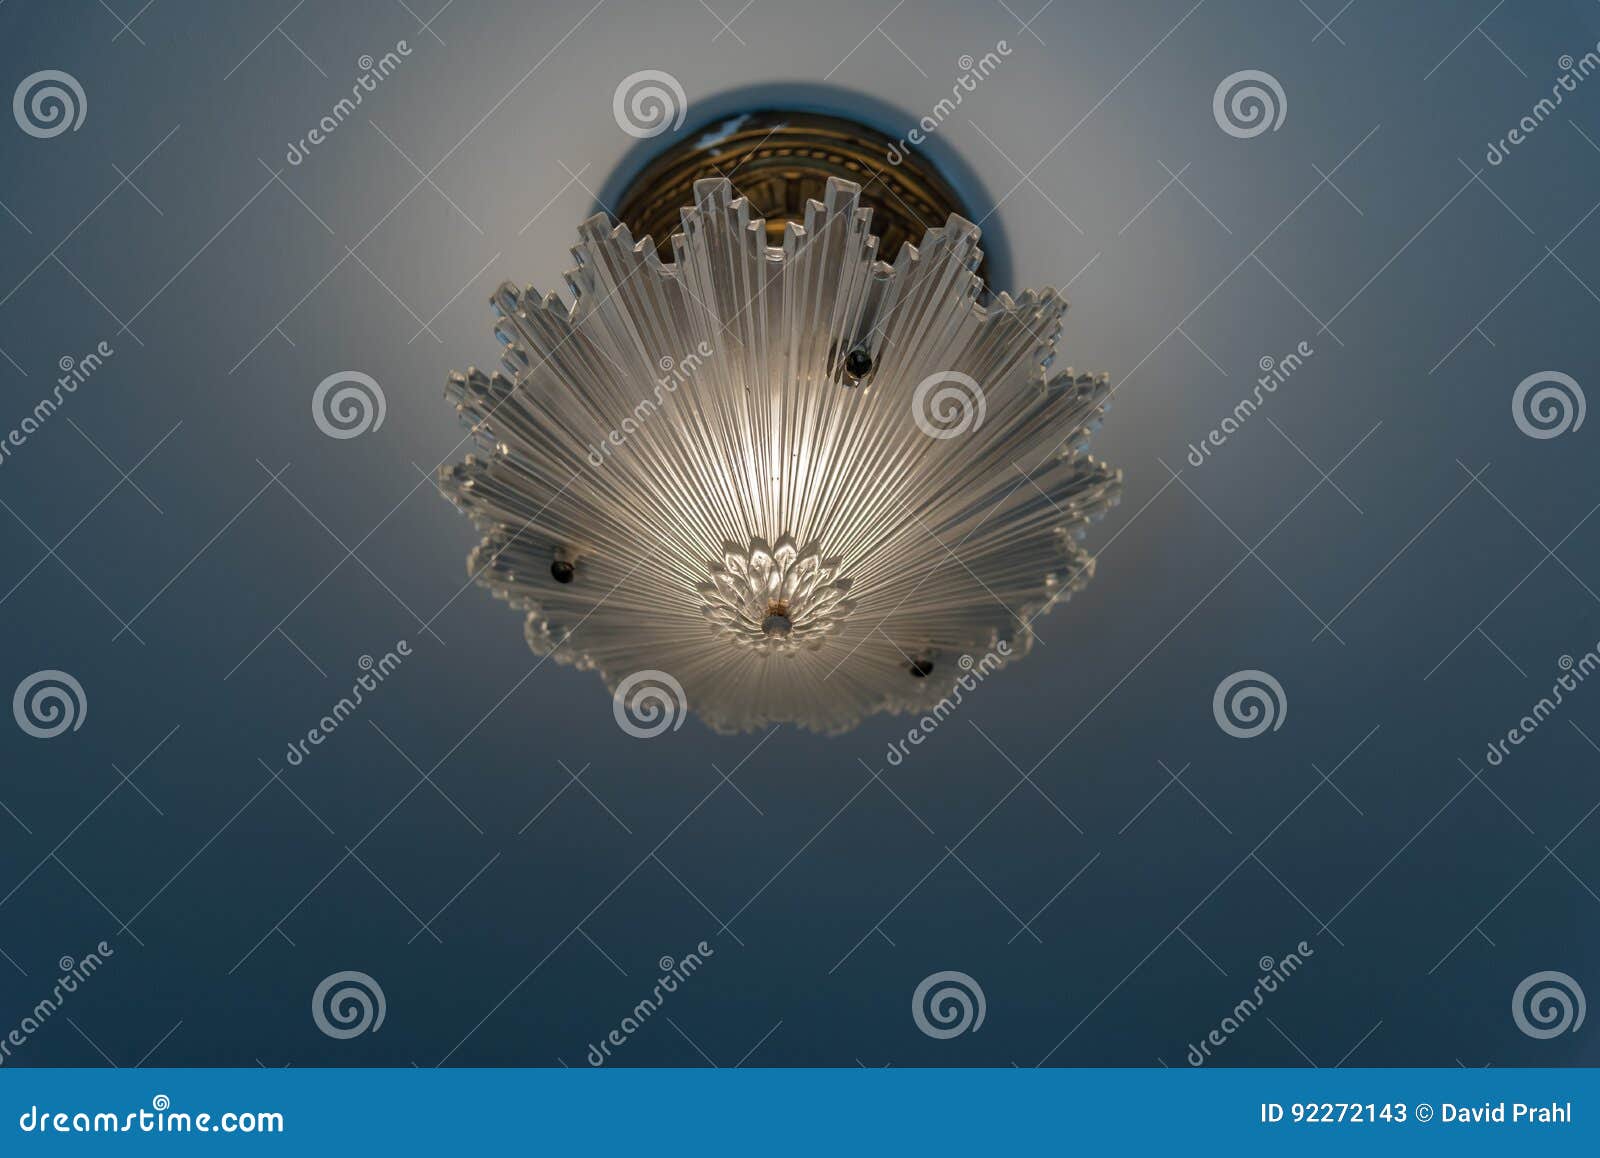 Vintage Art Deco Glass Ceiling Light Fixture Stock Image Image